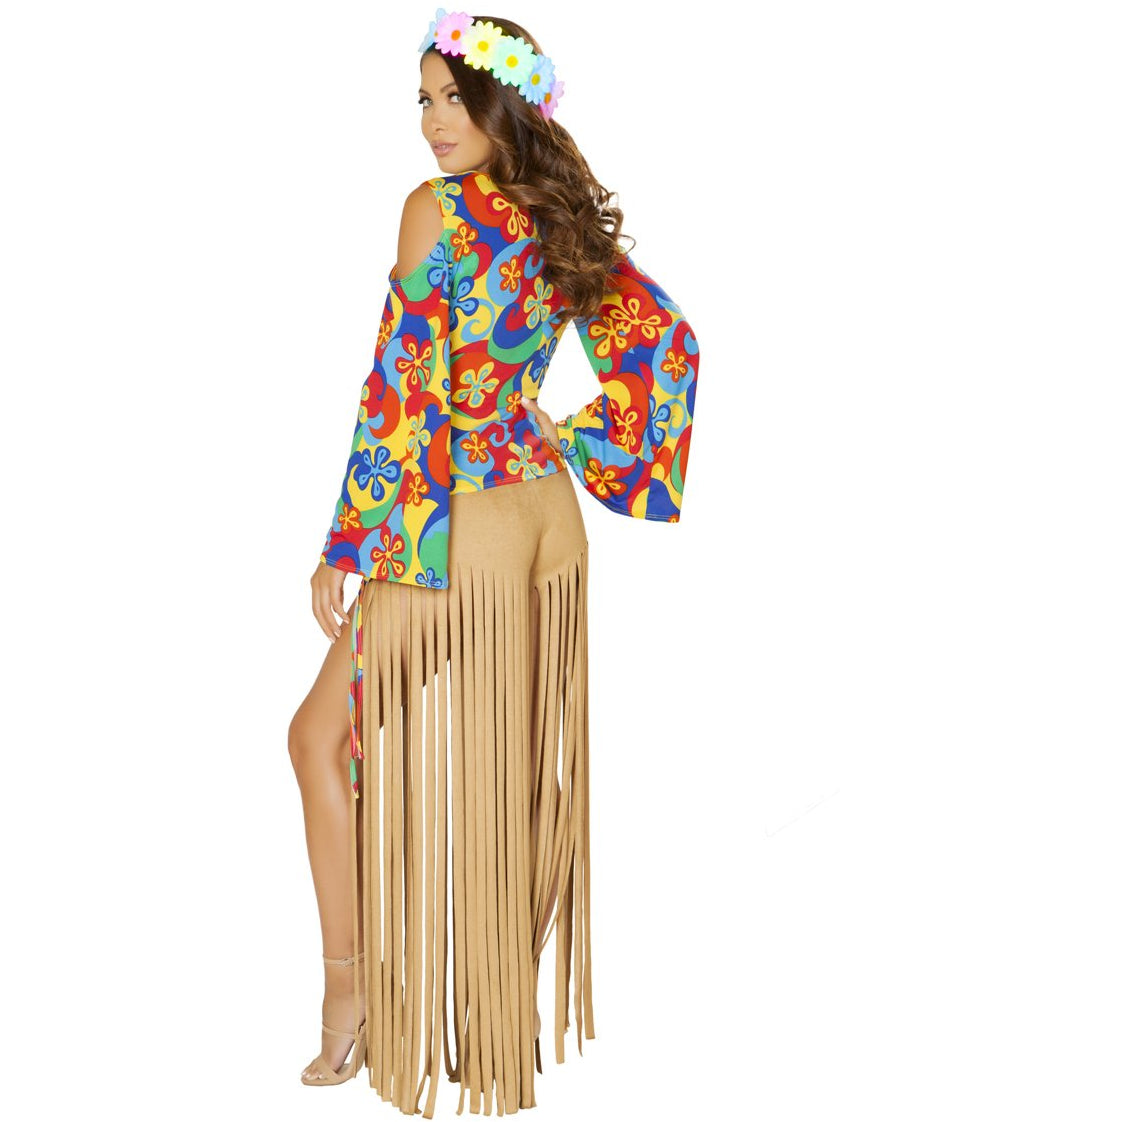 Hippie gogo girl retro costume